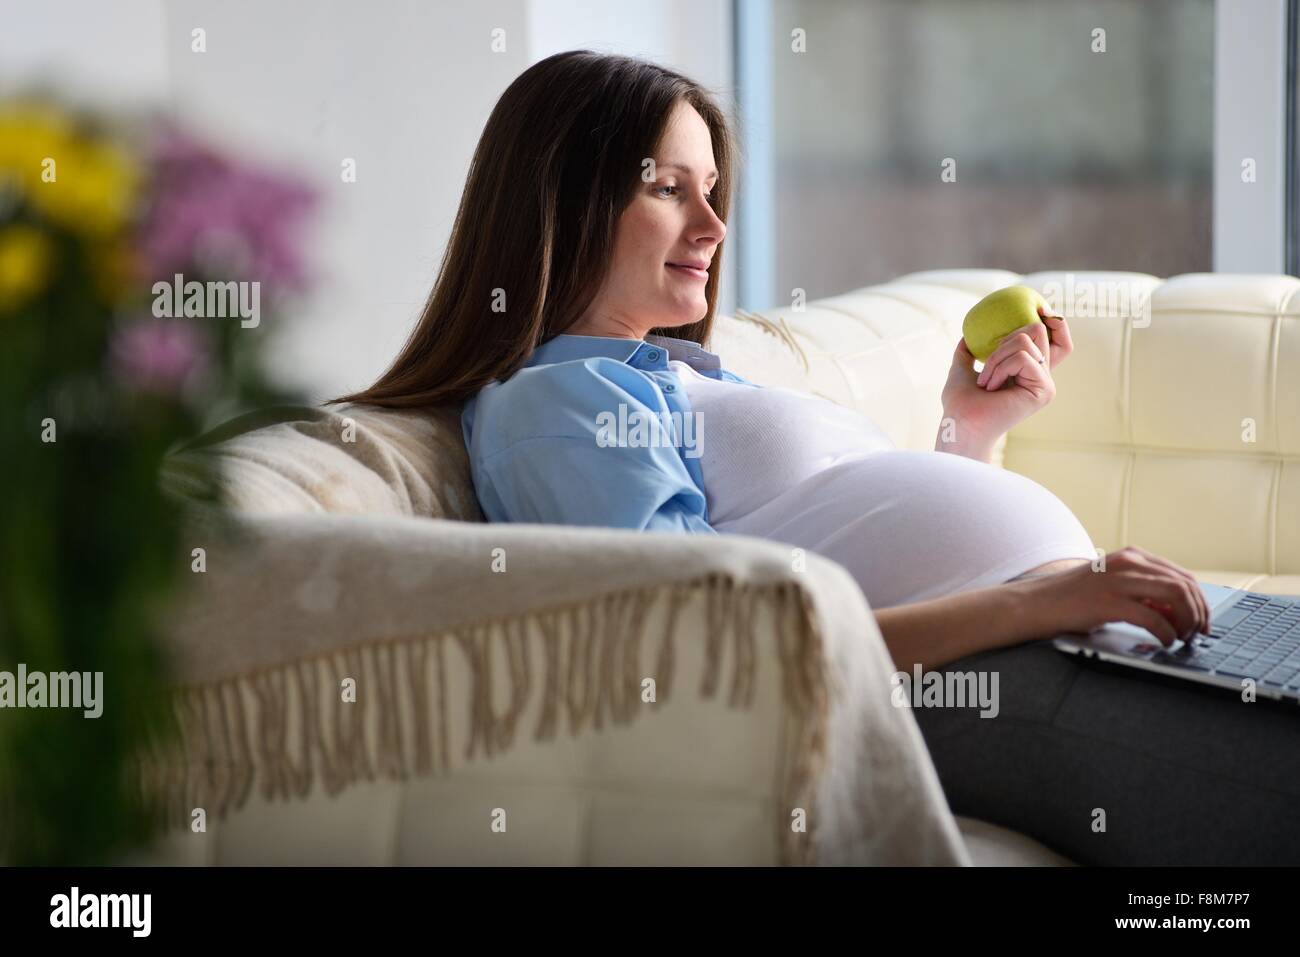 Pregnant woman sitting on sofa, using laptop Stock Photo